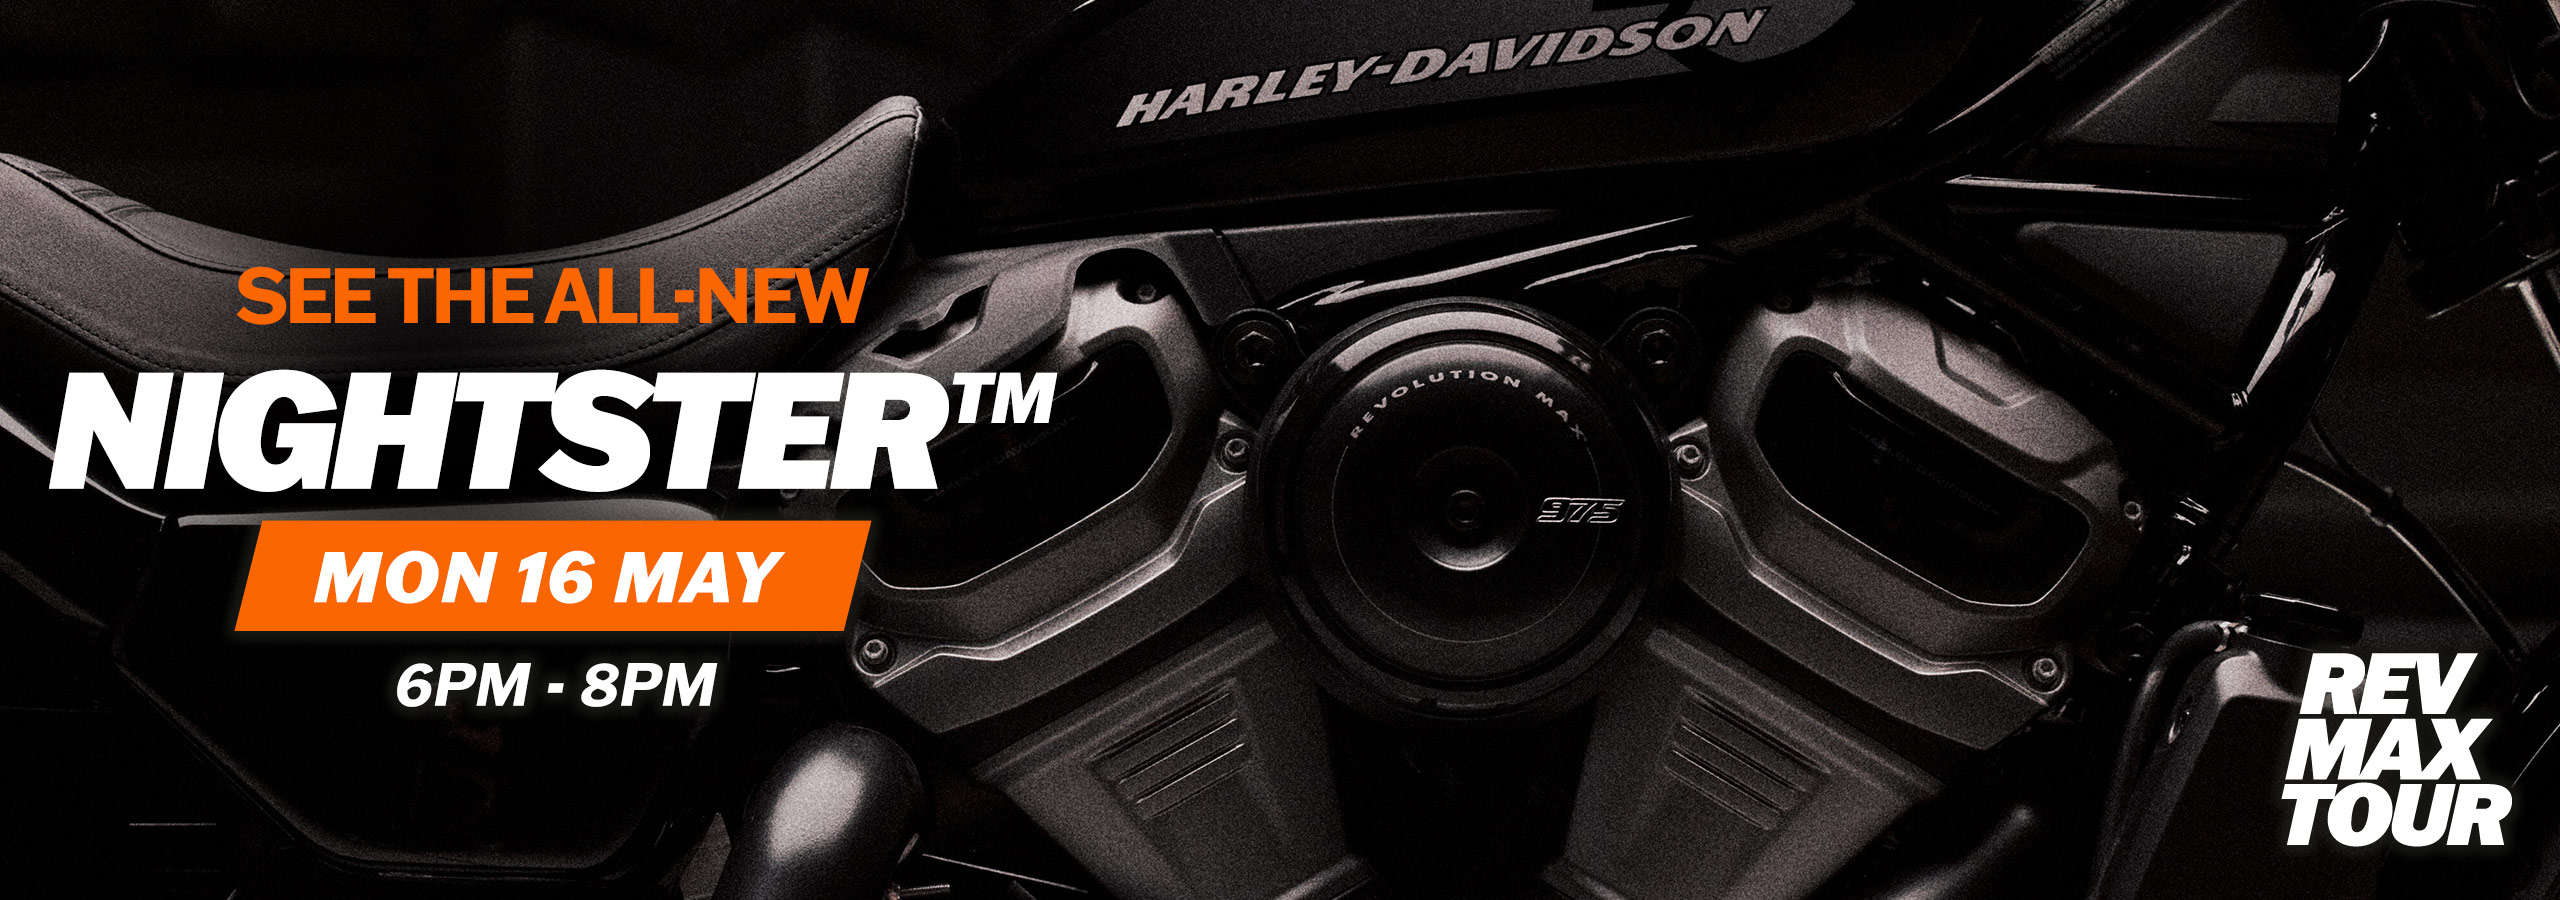 Revolution Max Tour - Maidstone Harley-Davidson Nightster